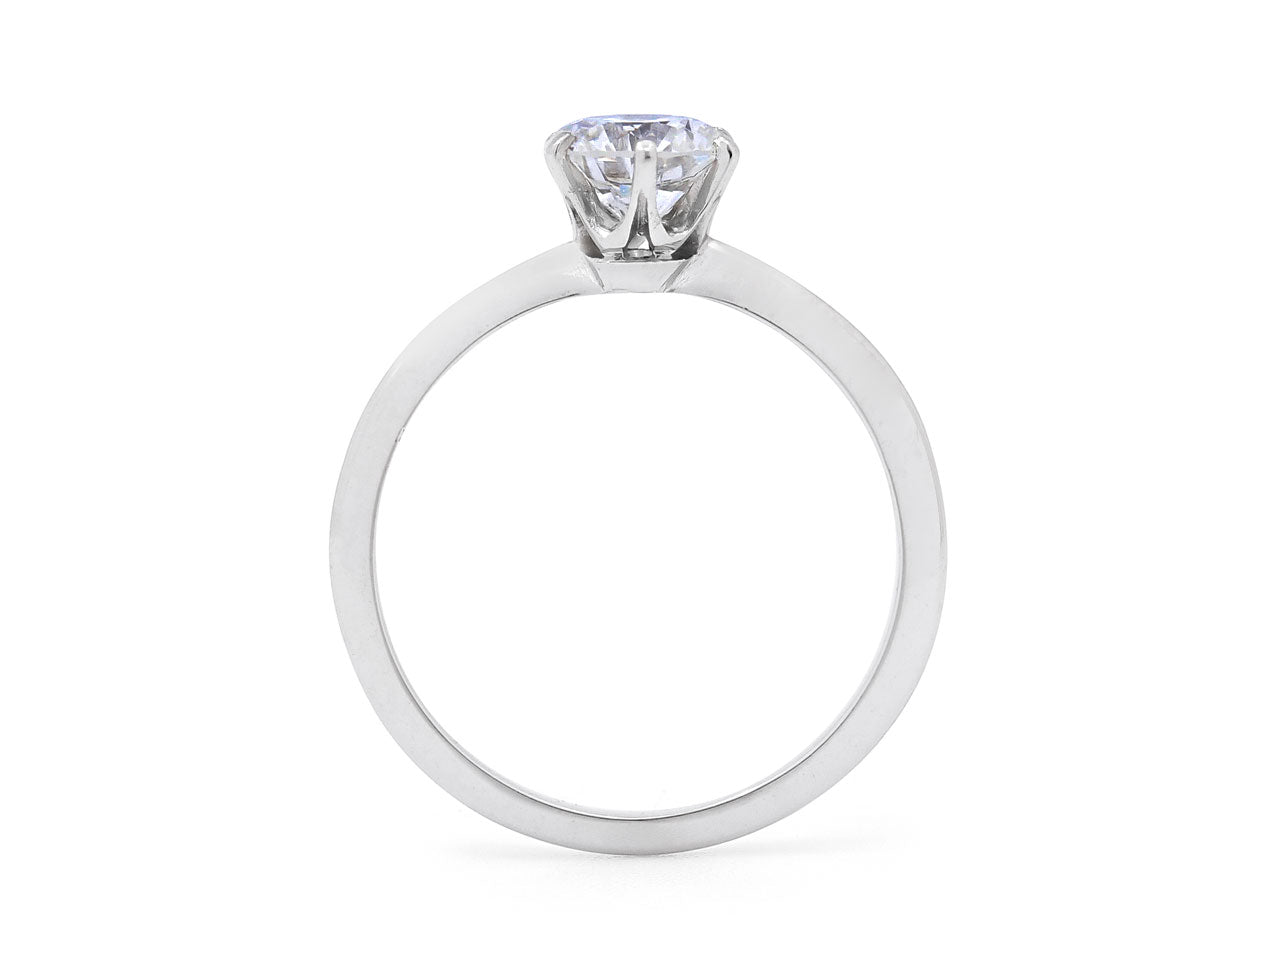 Tiffany & Co. 'Tiffany Setting' Diamond Solitaire Ring, 0.75 carat G/VS-2, in Platinum